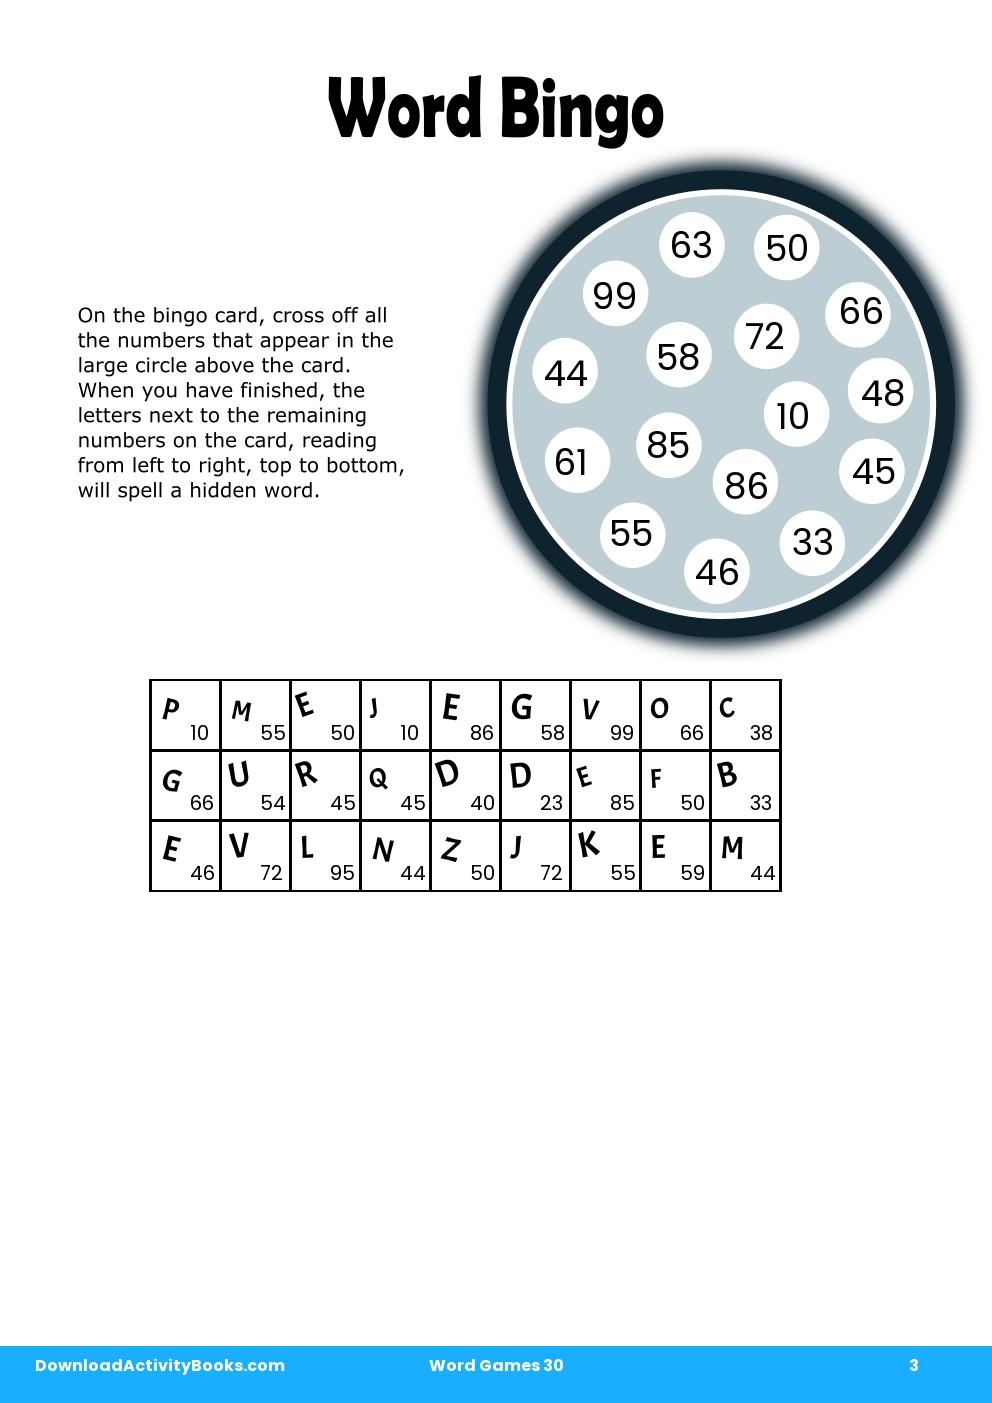 Word Bingo in Word Games 30